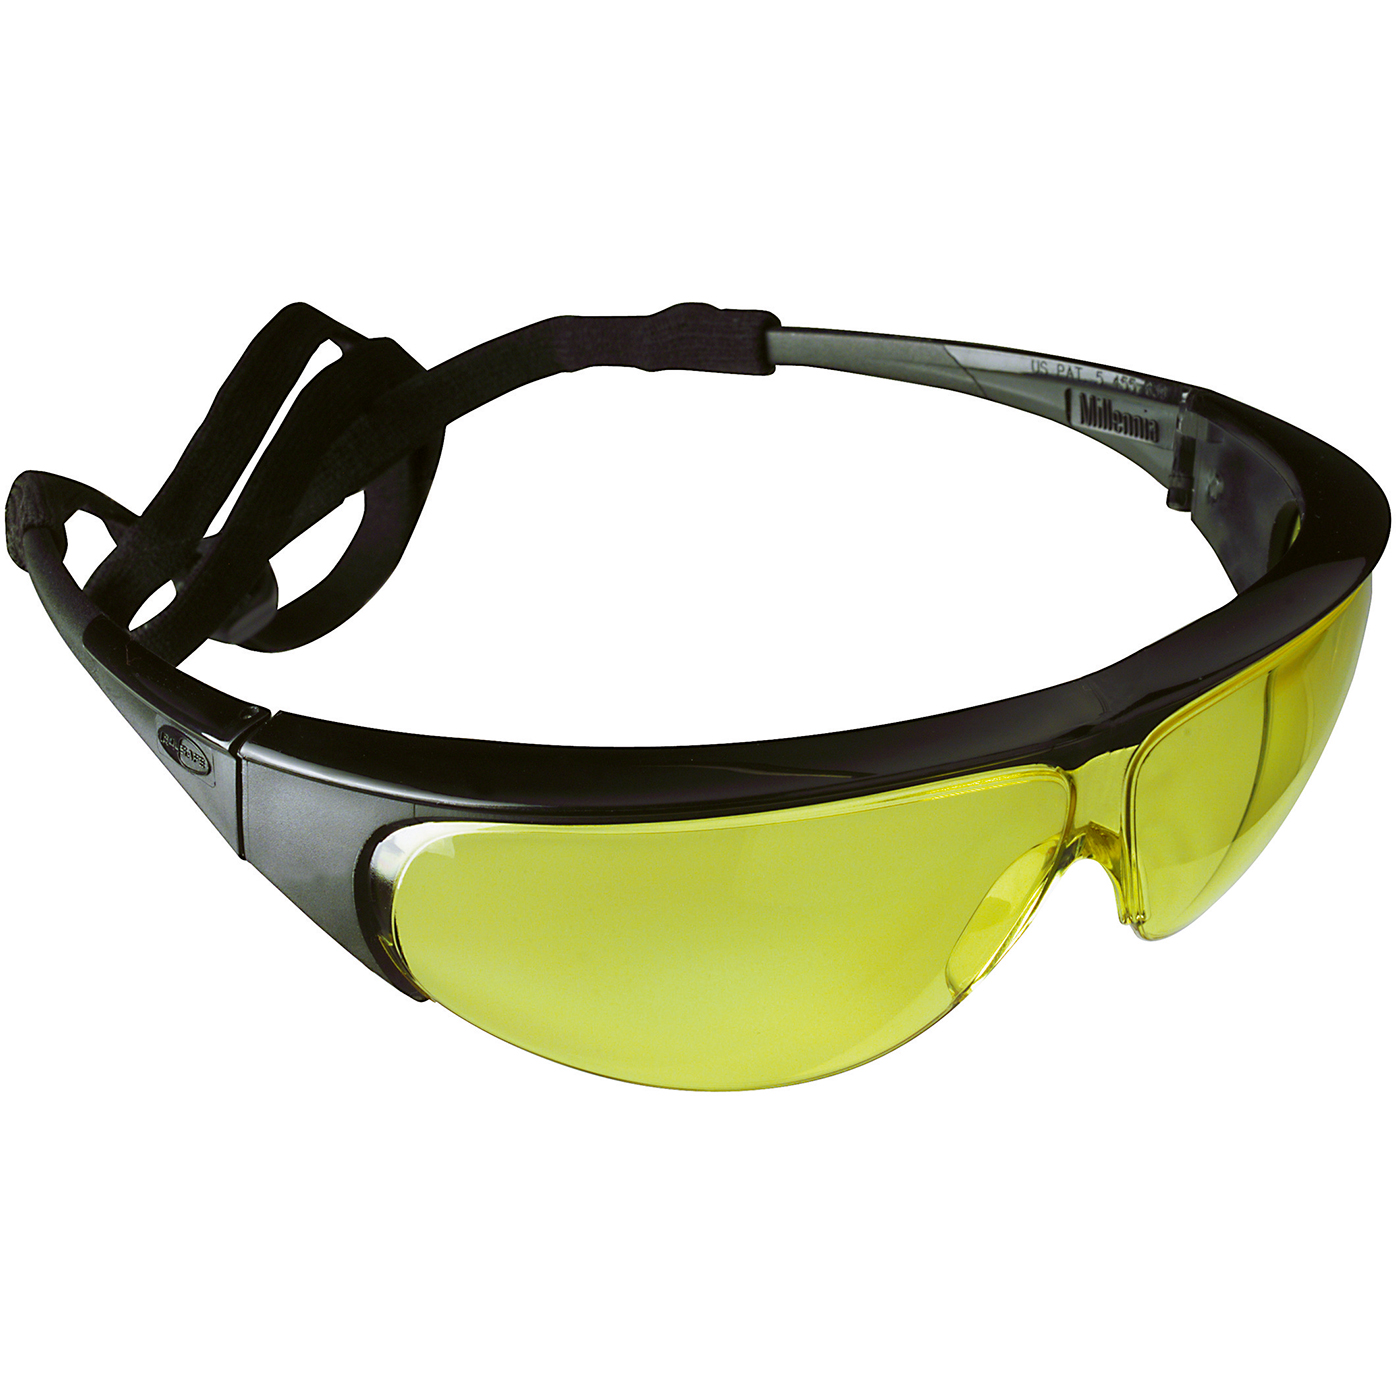 Millennia Protective Goggles, Lens Yellow, Frame Black - 1 piece